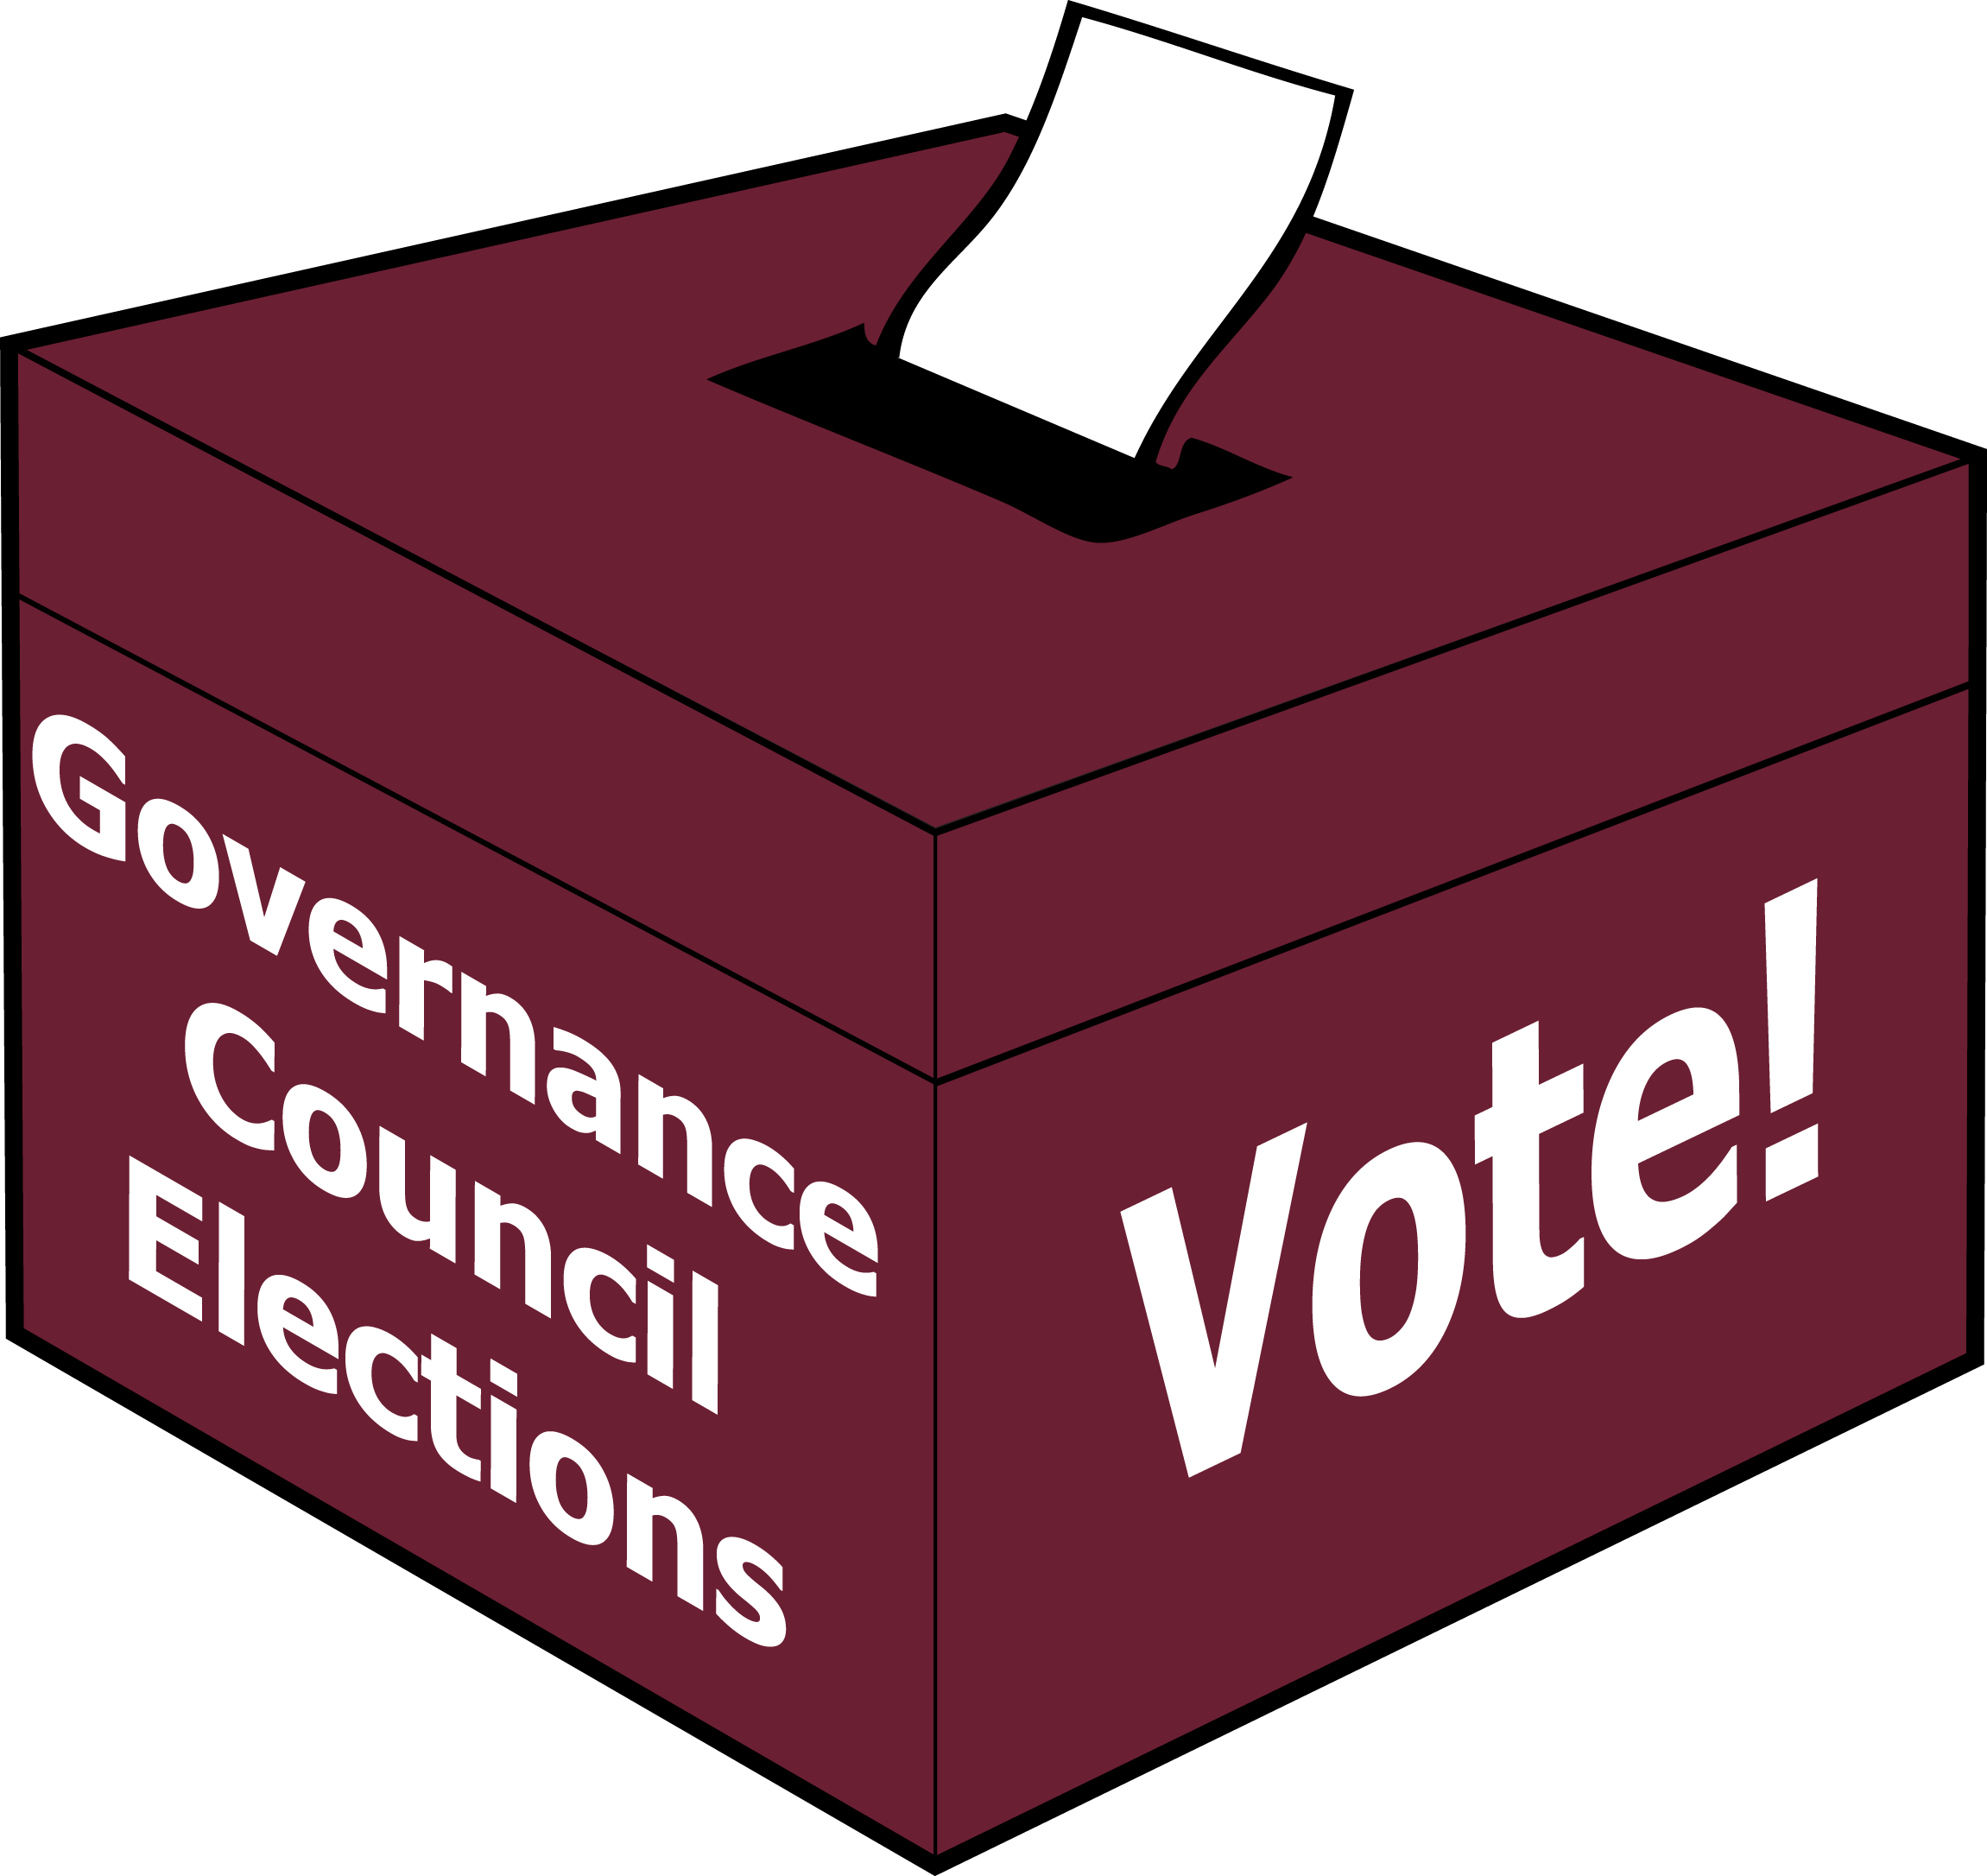 Box Voting Ballot Vector Free Download Image PNG Image